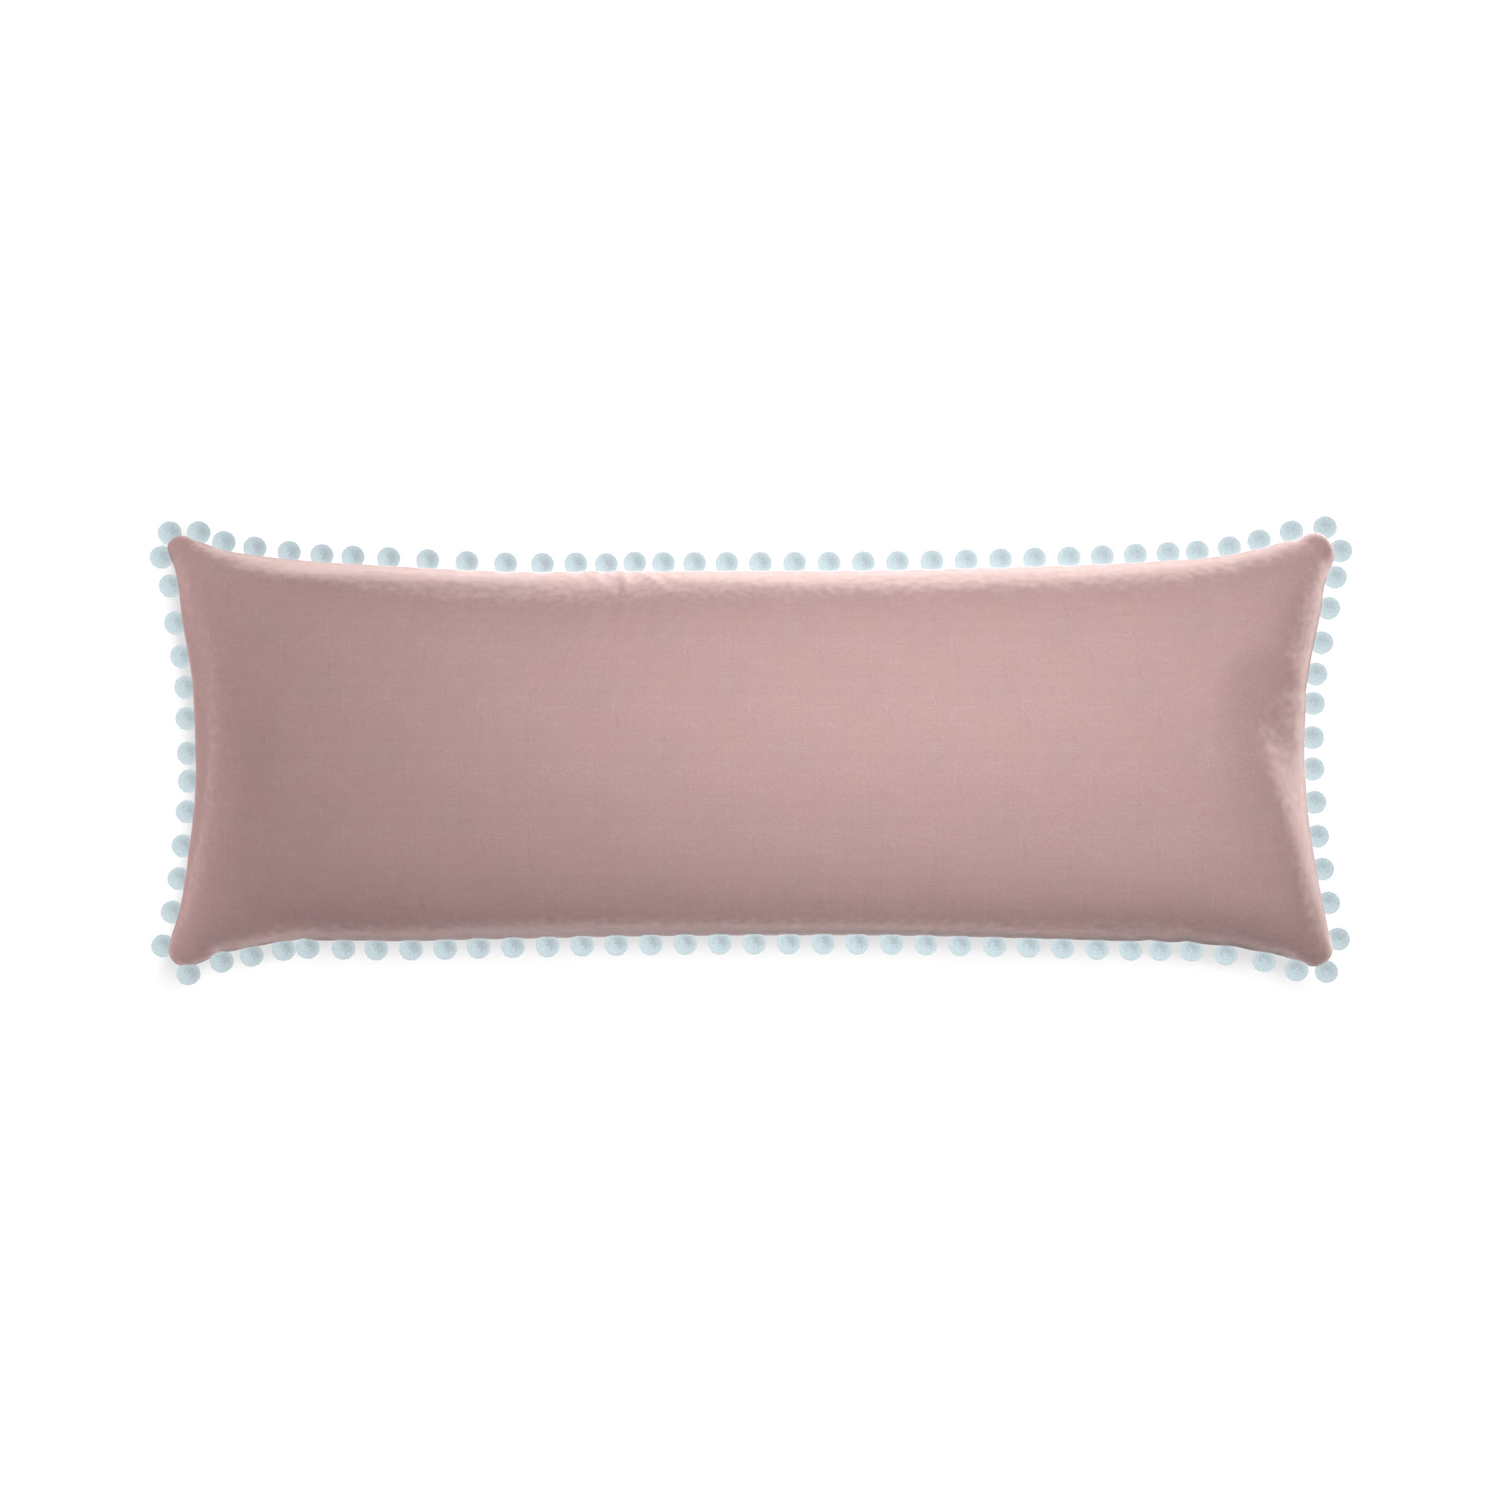 rectangle mauve velvet pillow with light blue pom poms